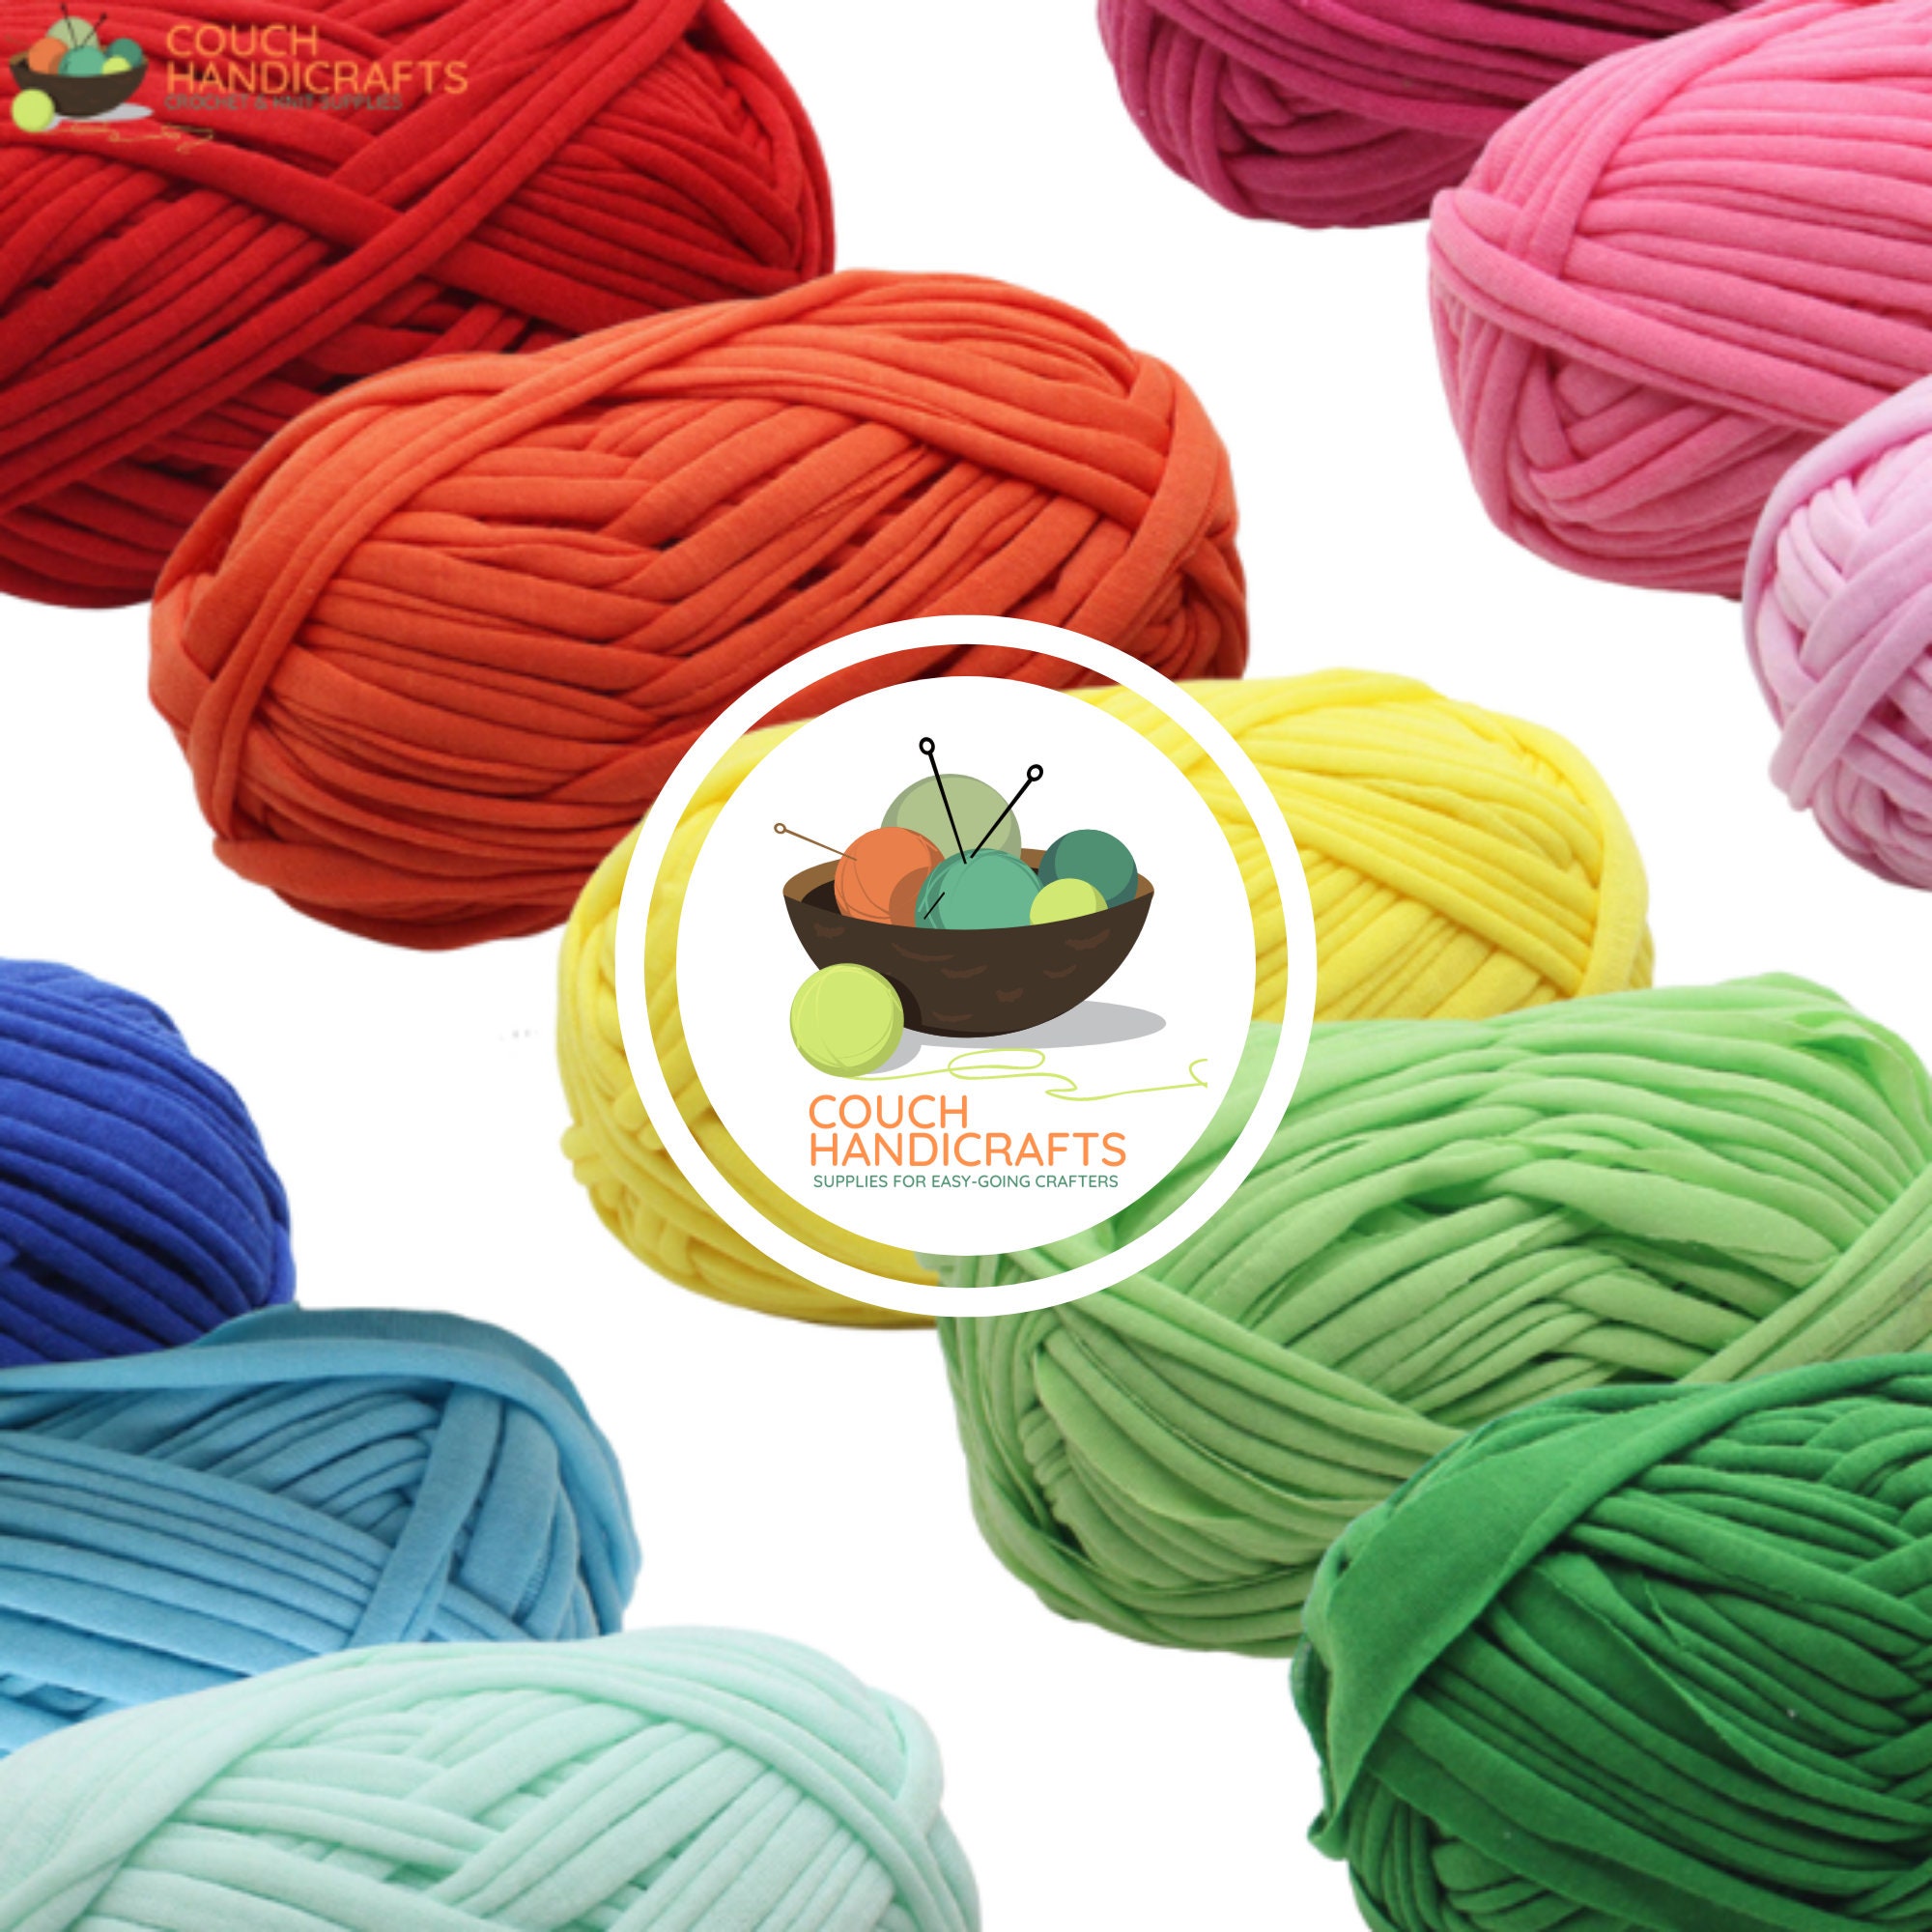 Bright Gold Lurex Yarn, Sparkle Metallic Yarn, Yellow Gold Soft Ribbon Yarn,  Knitting, Crochet or Wall Hanging Projects, Shining Yarn 